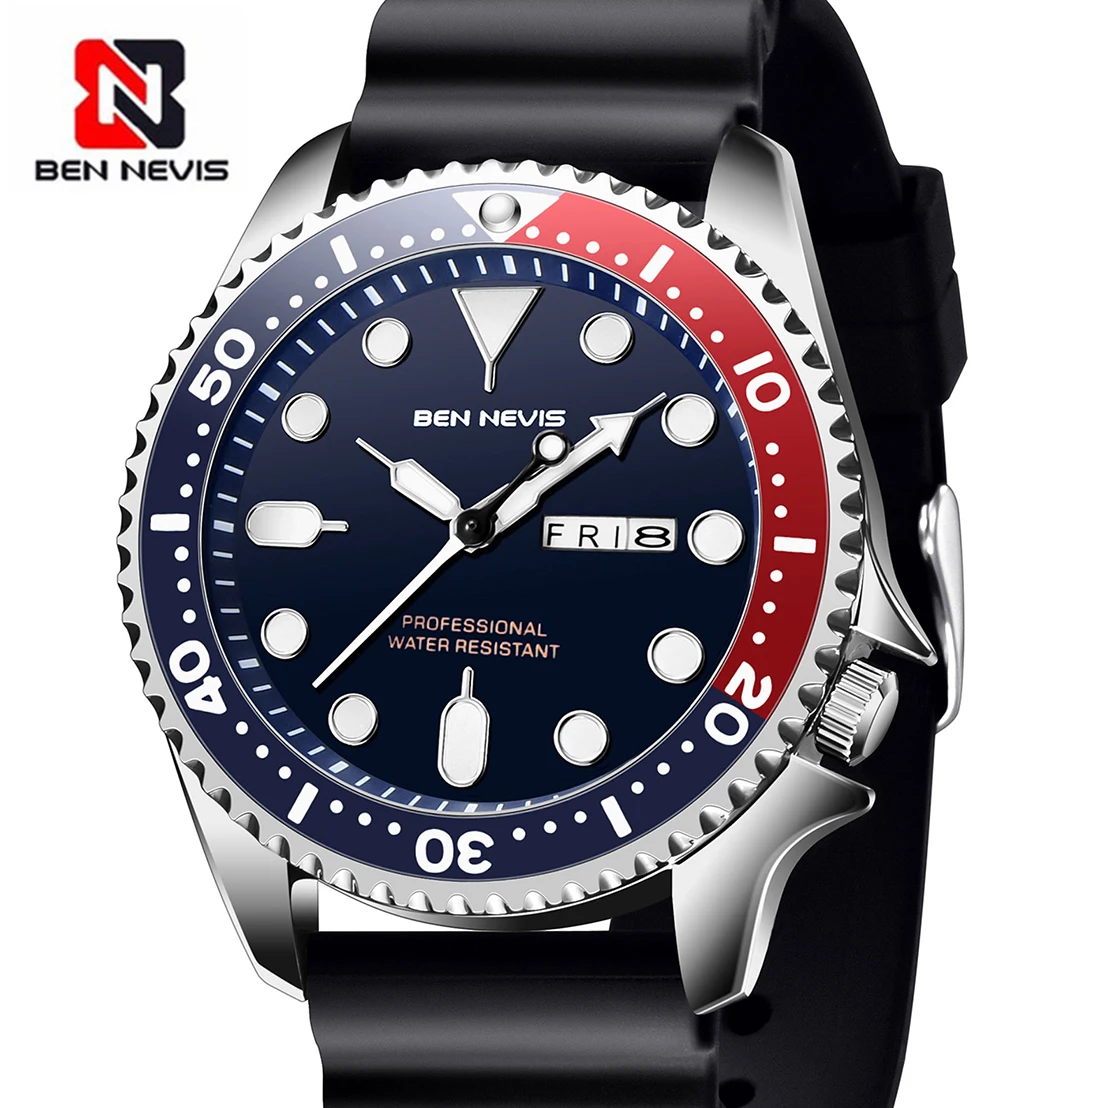 

Ben Nevis Men's Watches Analog Quartz Watch with Date Luminous Hands Military Watch Waterproof Rubber Strap Wristwatch for Man